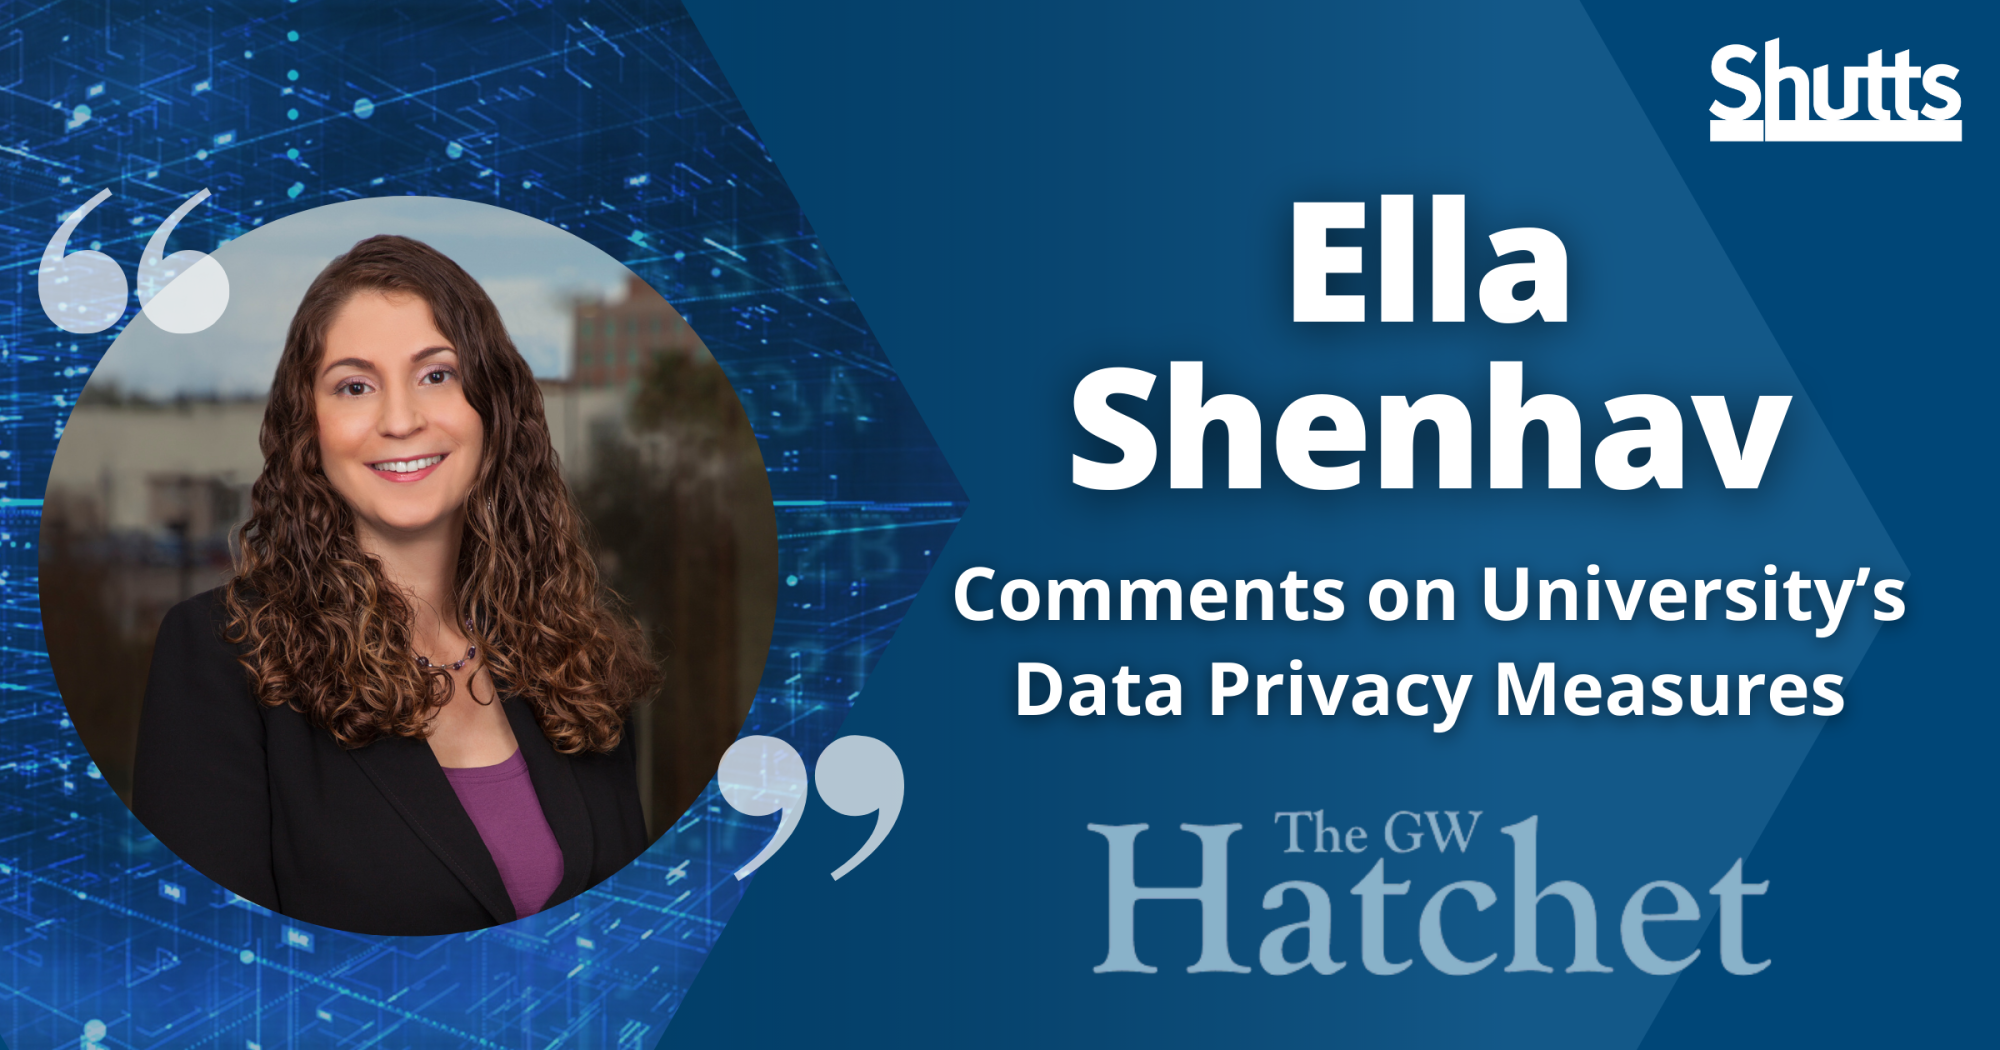 Ella Shenhav Comments on University’s Data Privacy Measures